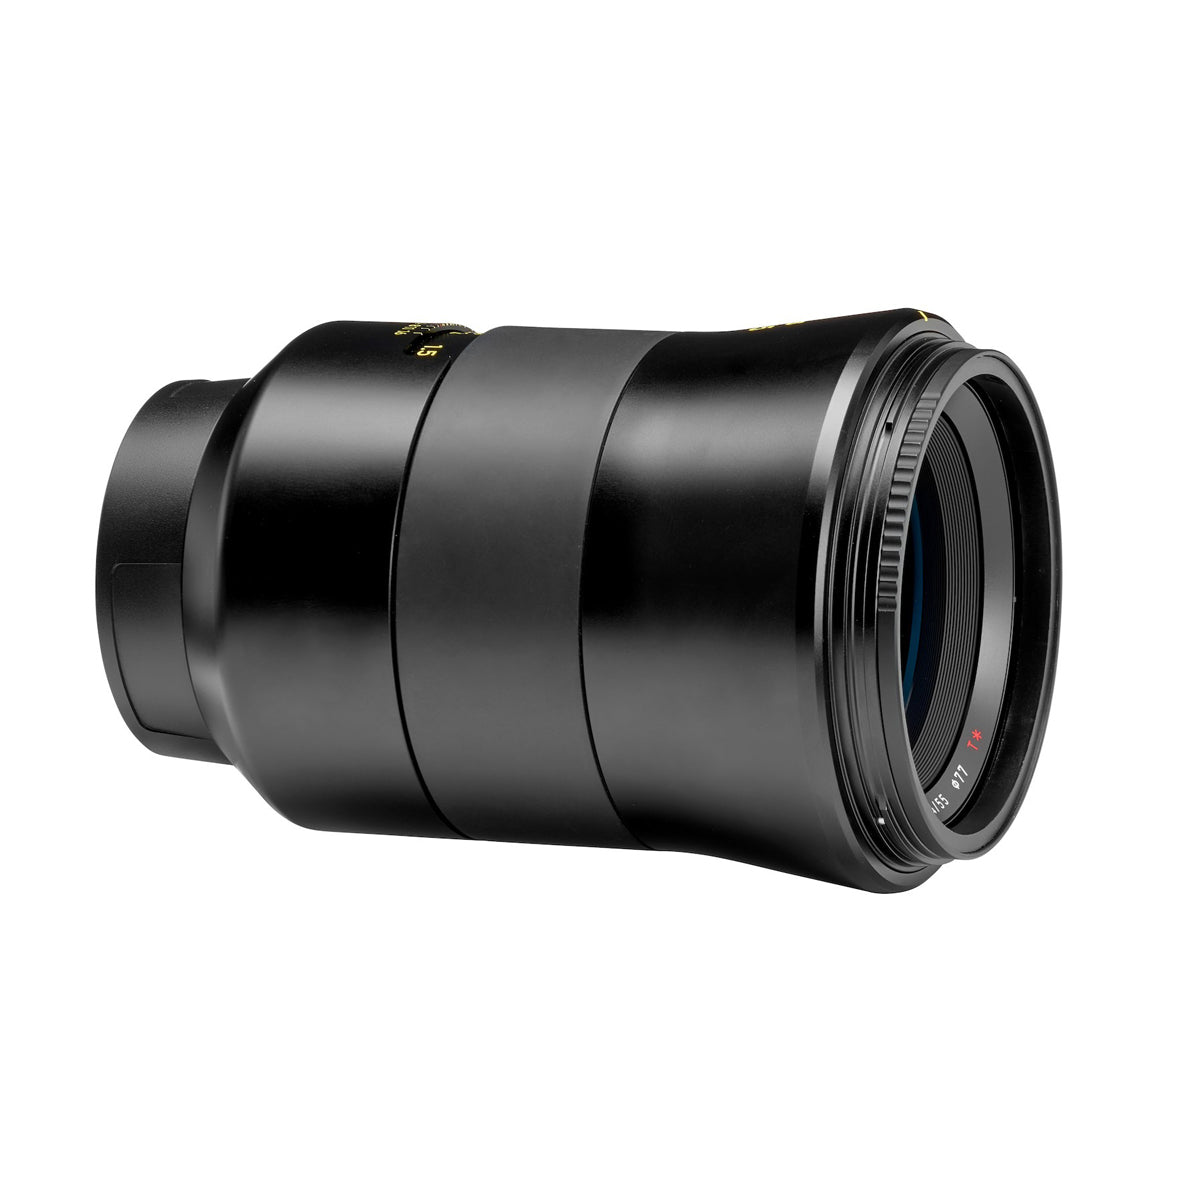 XUME 46mm Lens Adapter